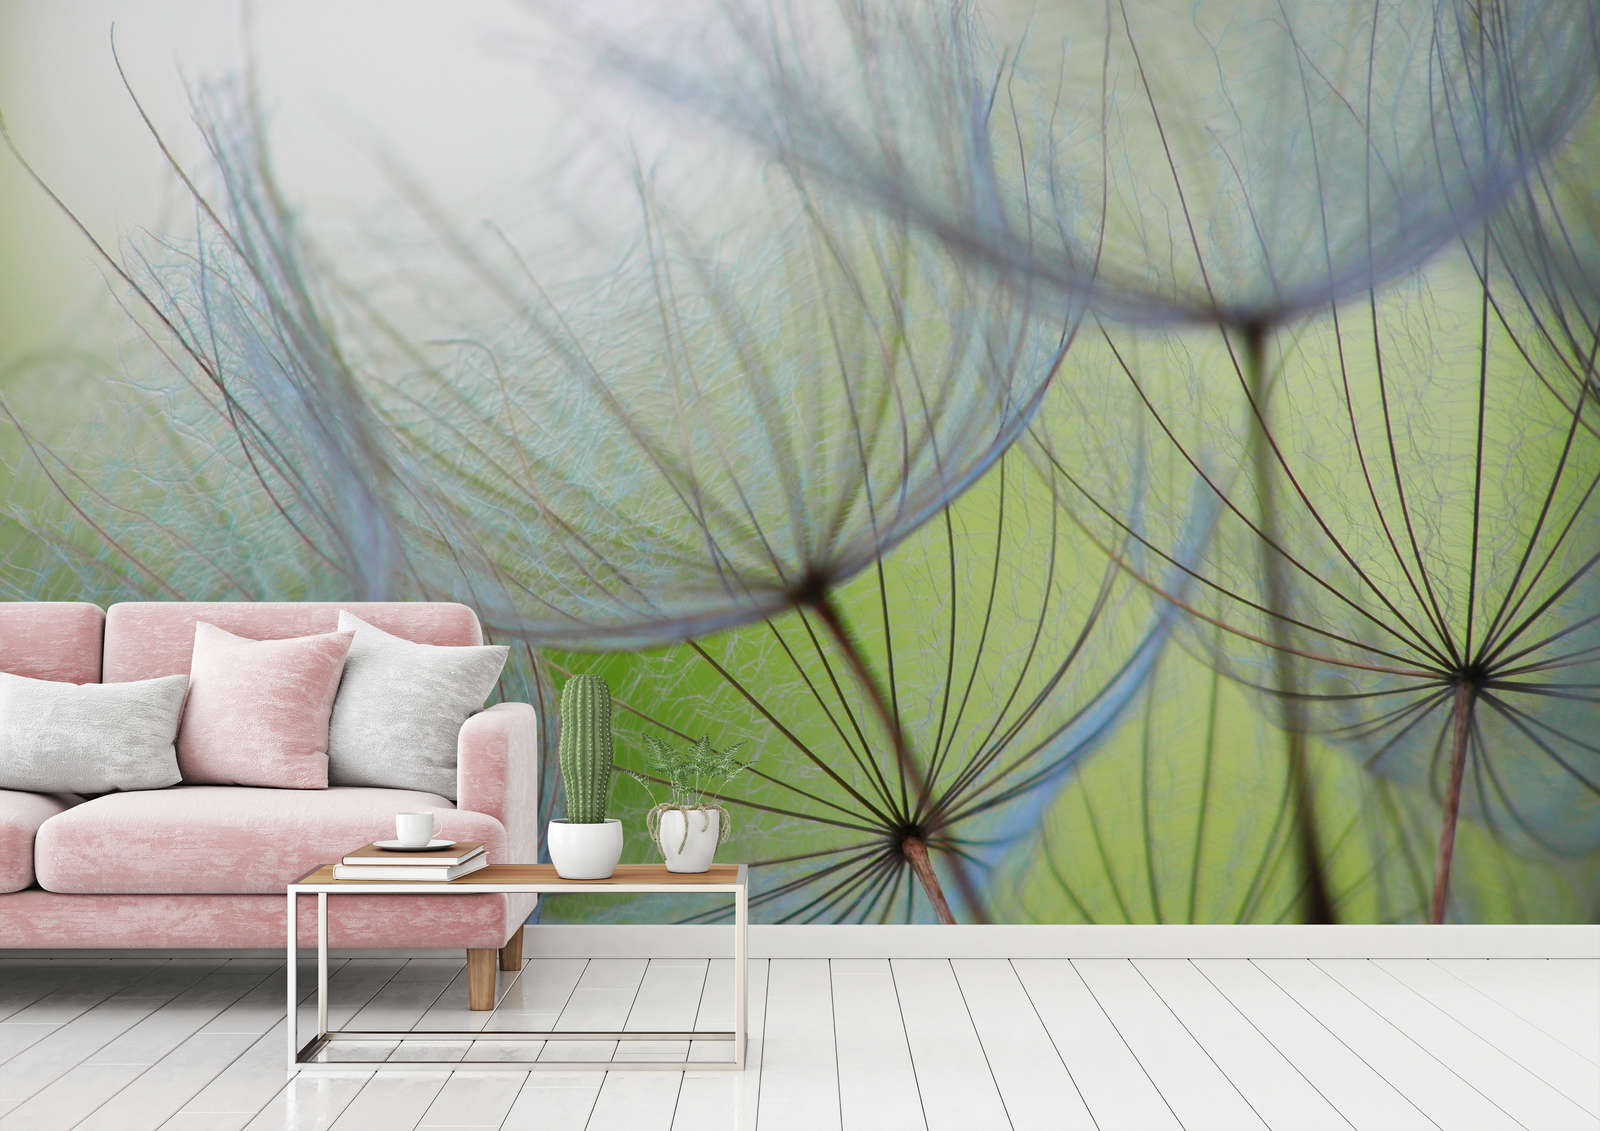             Photo wallpaper detail with dandelions - Matt smooth non-woven
        